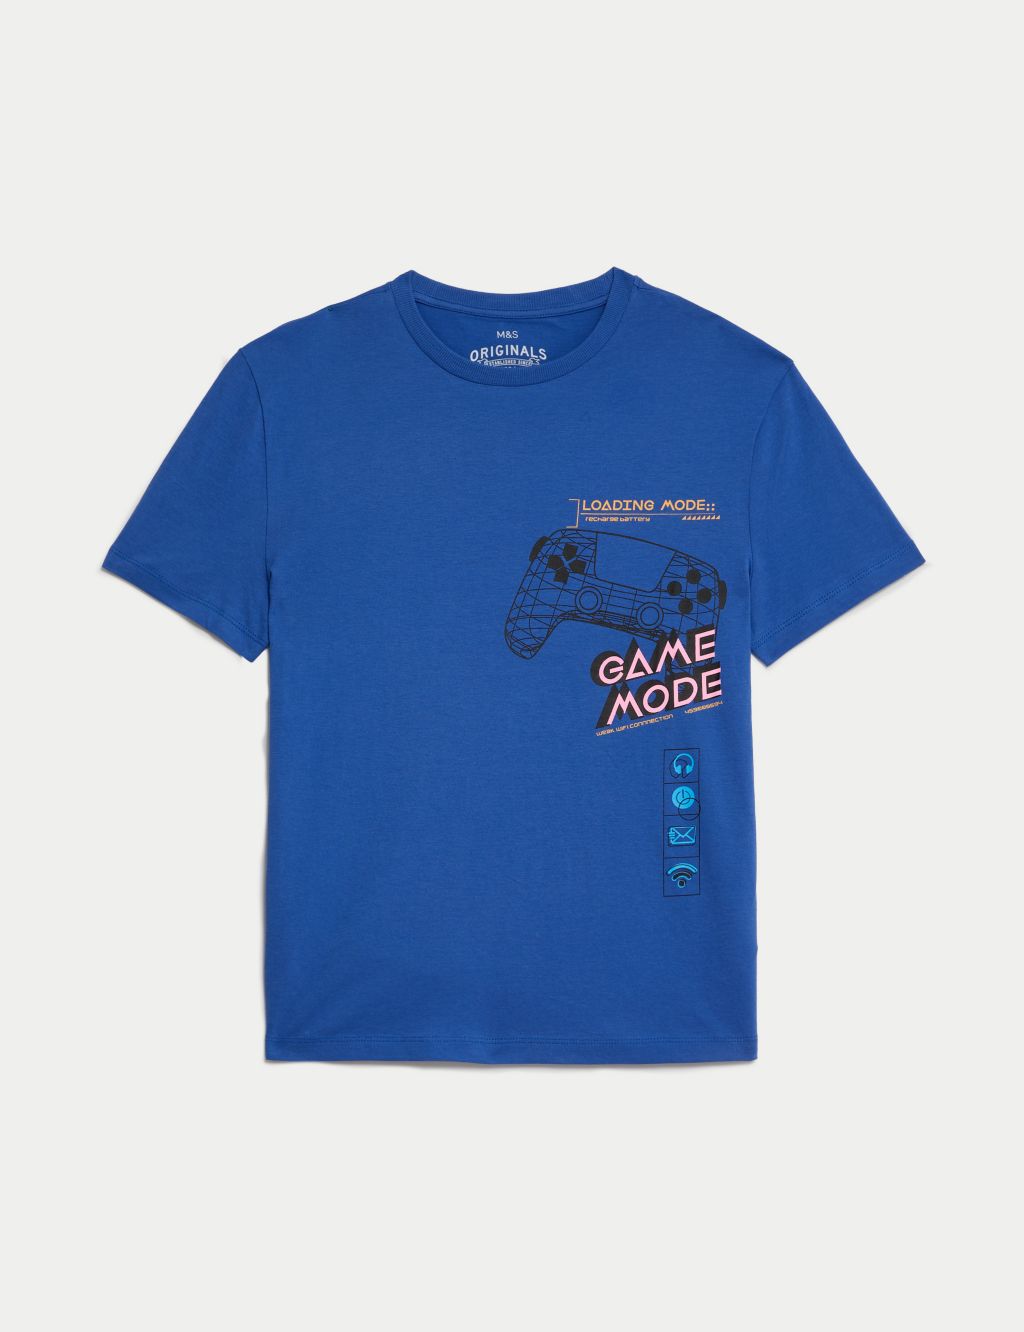 💗3/$15 💗 NWOT Skechers Girl’s XL Size 14/16 100% Cotton Baby Blue TShirt